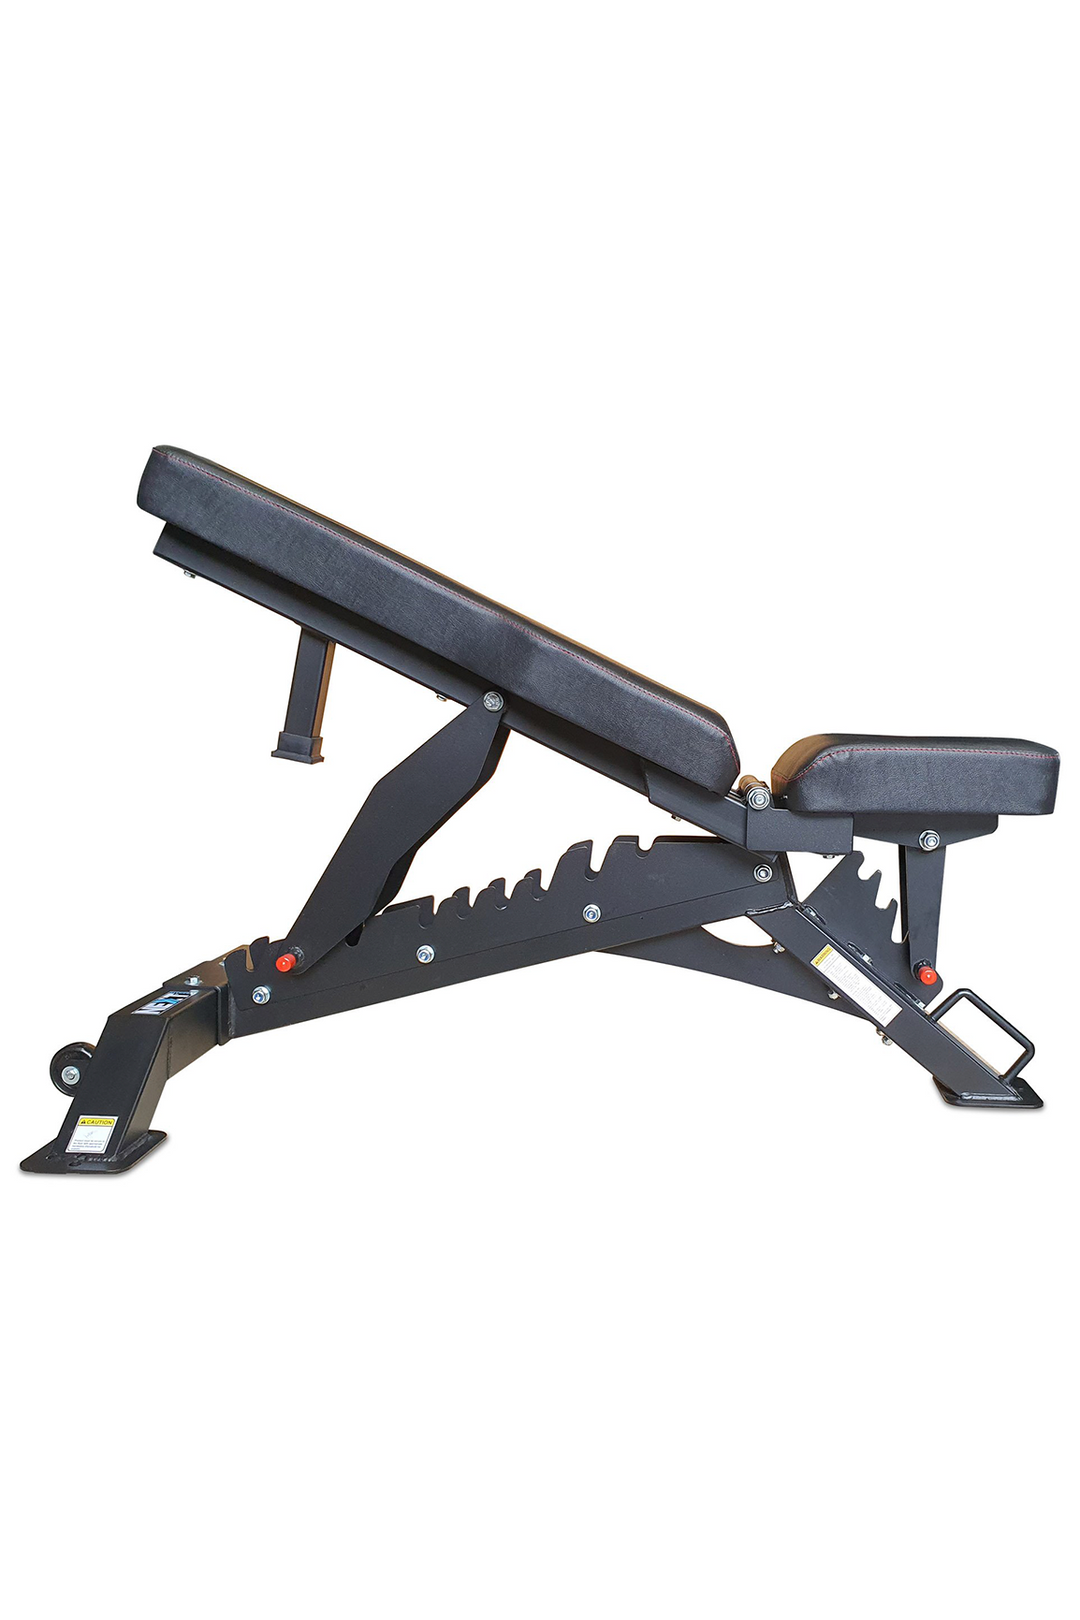 Next Fitness Adjustable Bench MT8